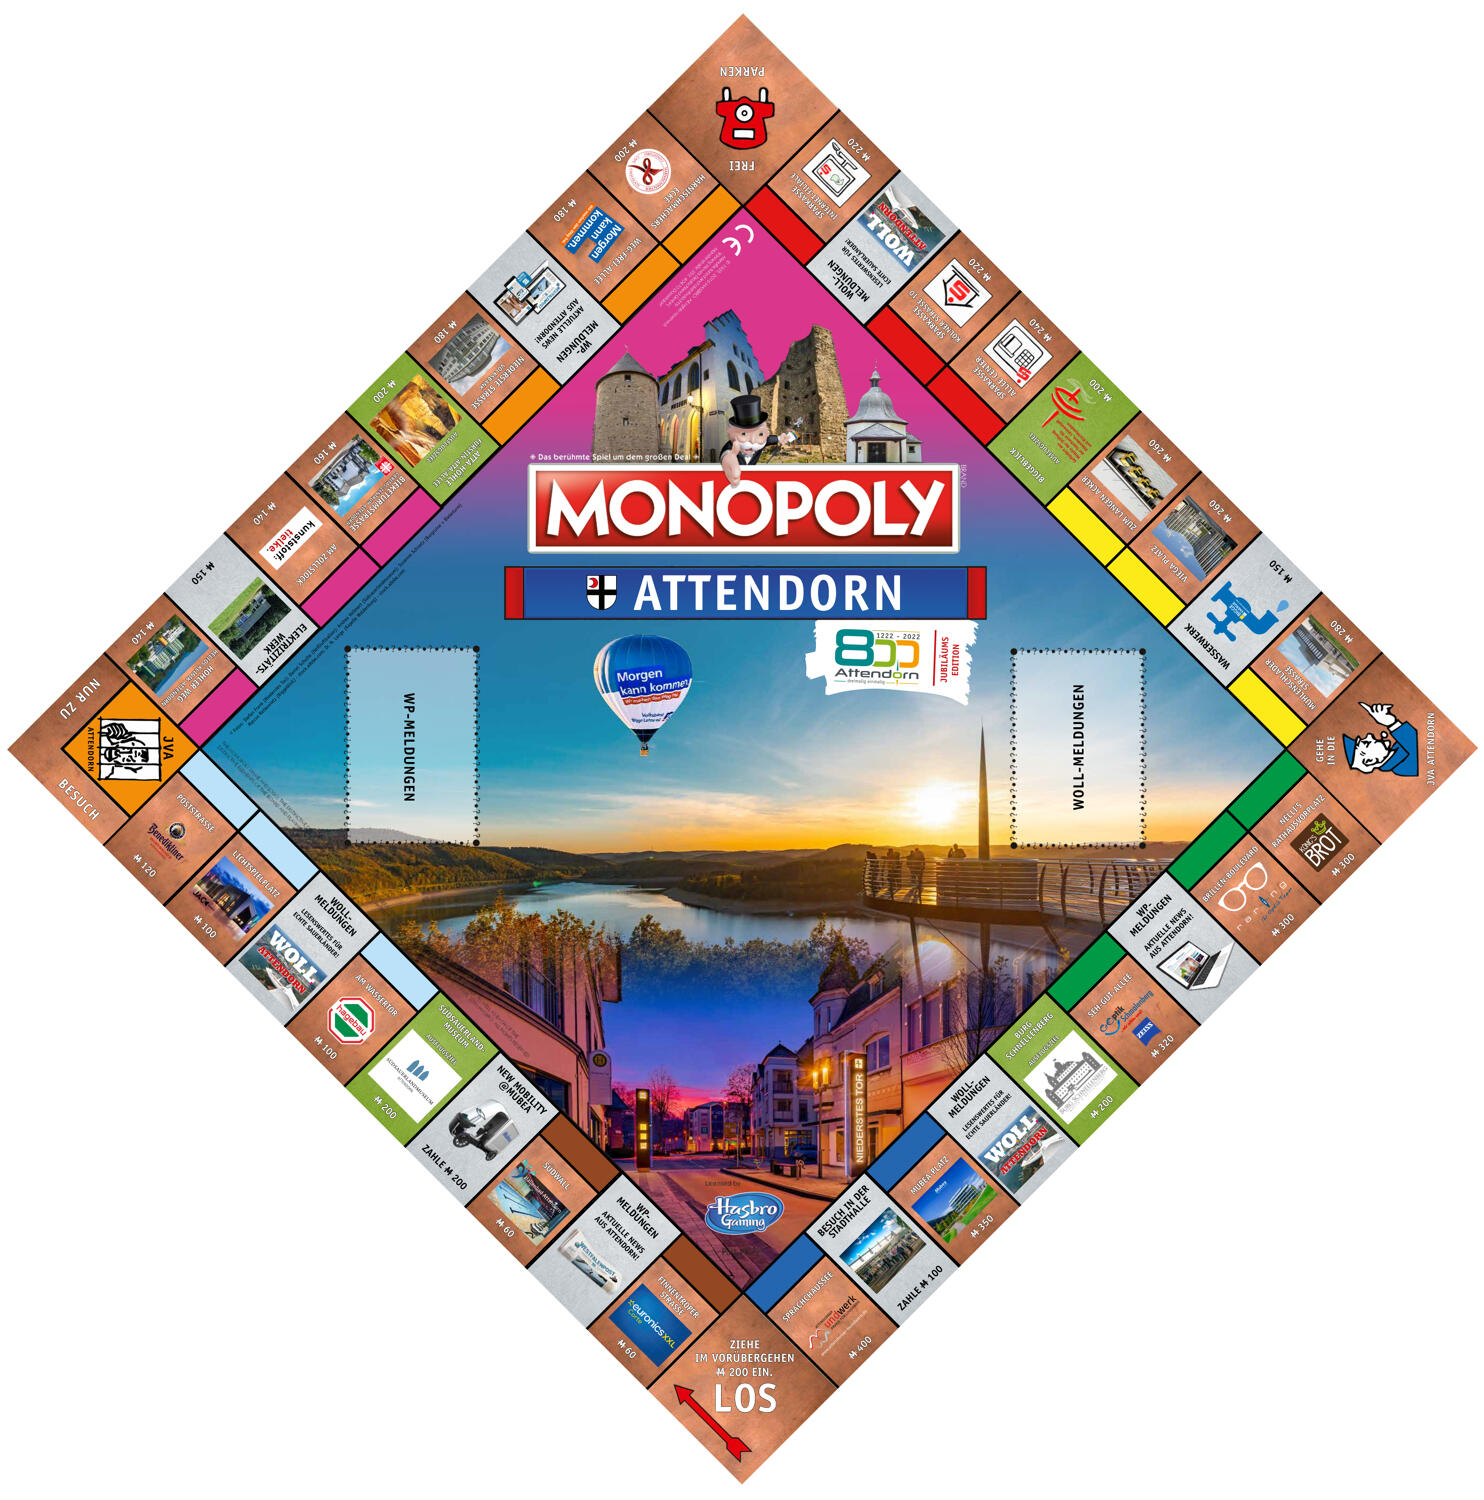 Monopoly - Attendorn